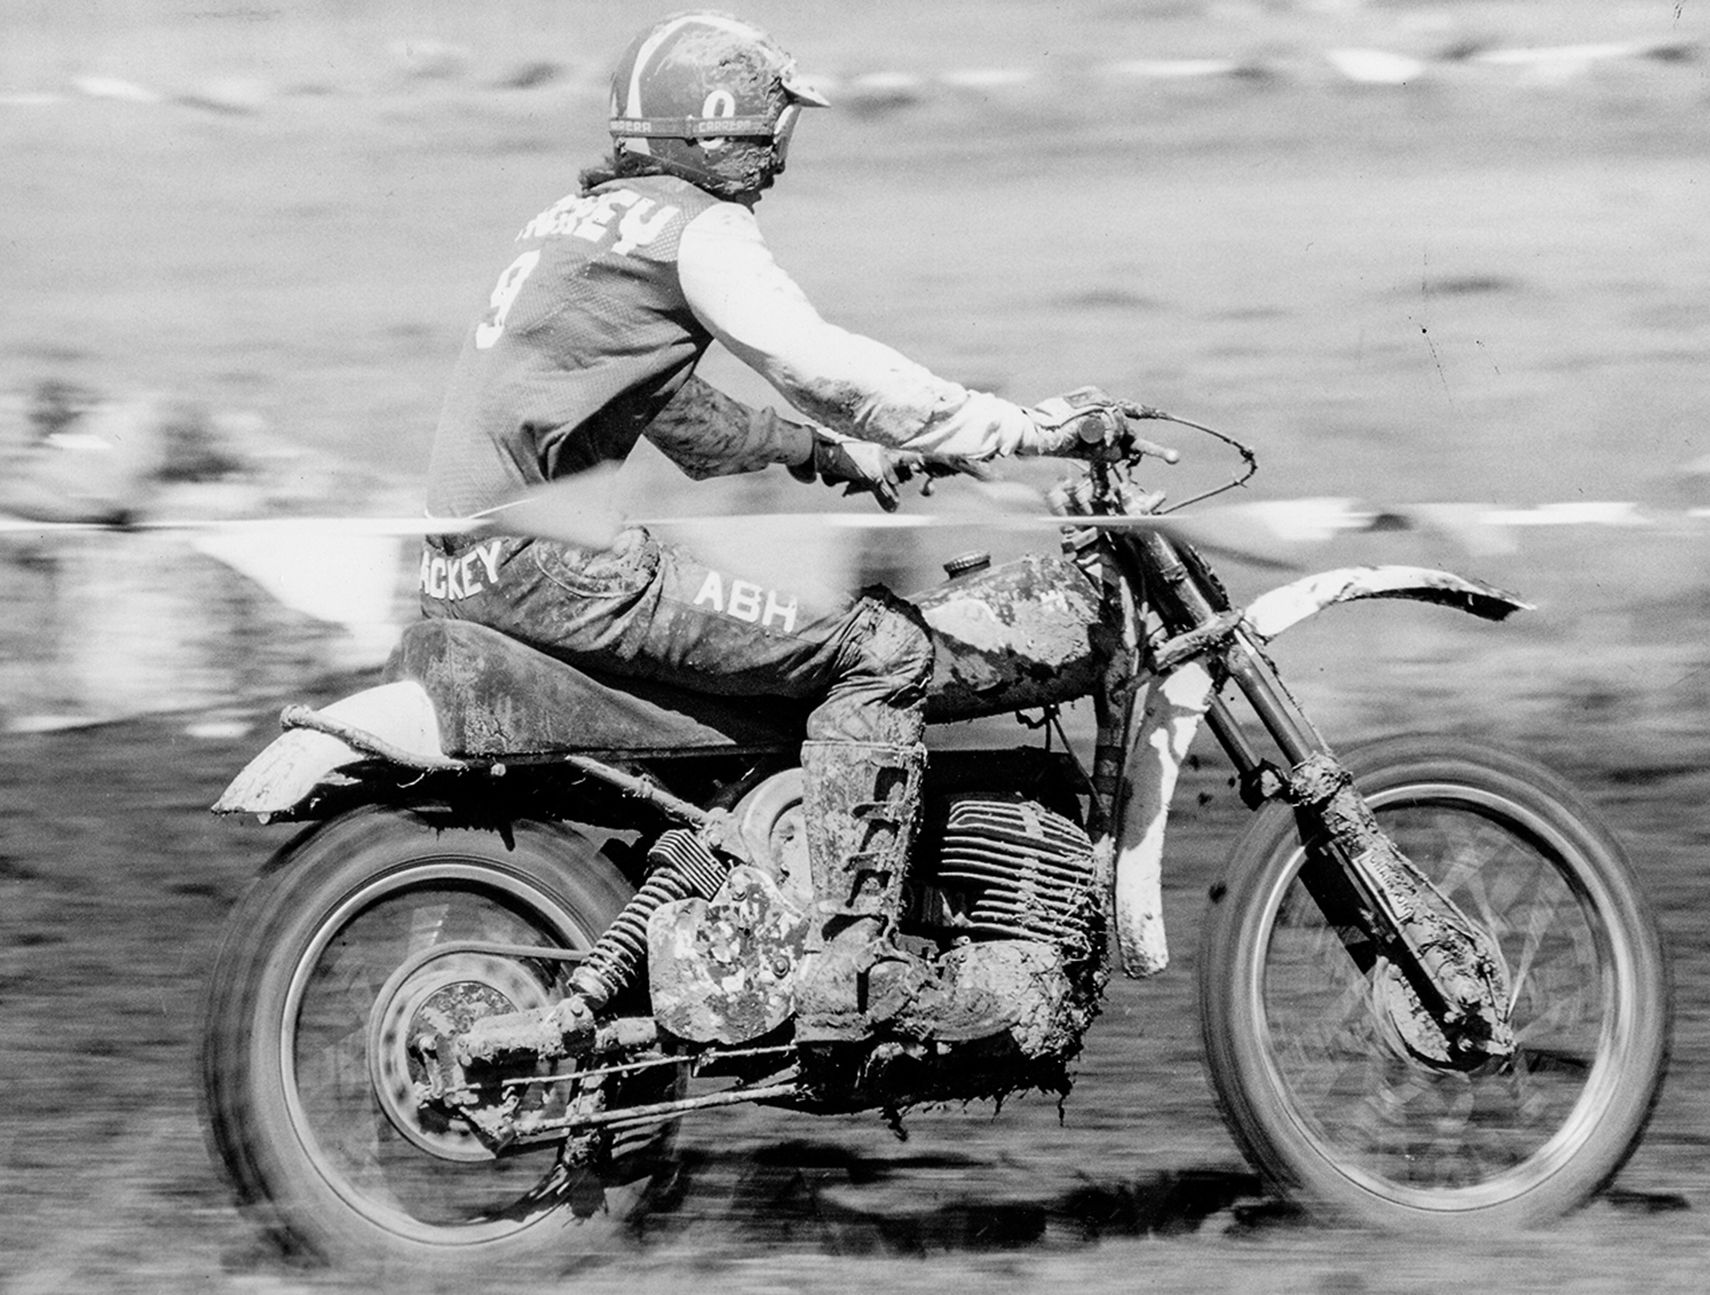 The Very First AMA Motocross Was Won By Brad Lackey, Riding A Kawasaki 500cc Motocross Bike